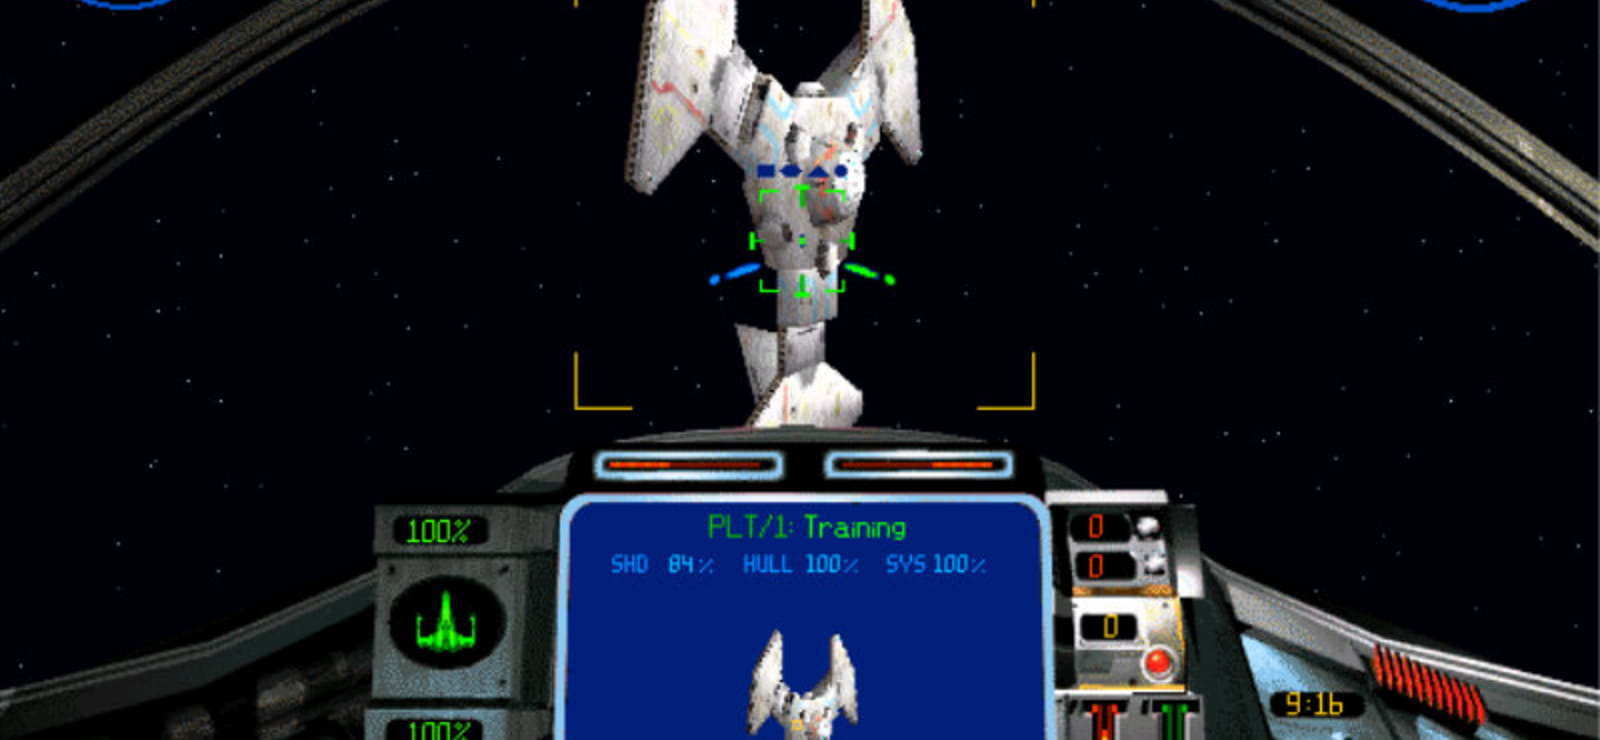 STAR WARS™: X-Wing Vs. TIE Fighter